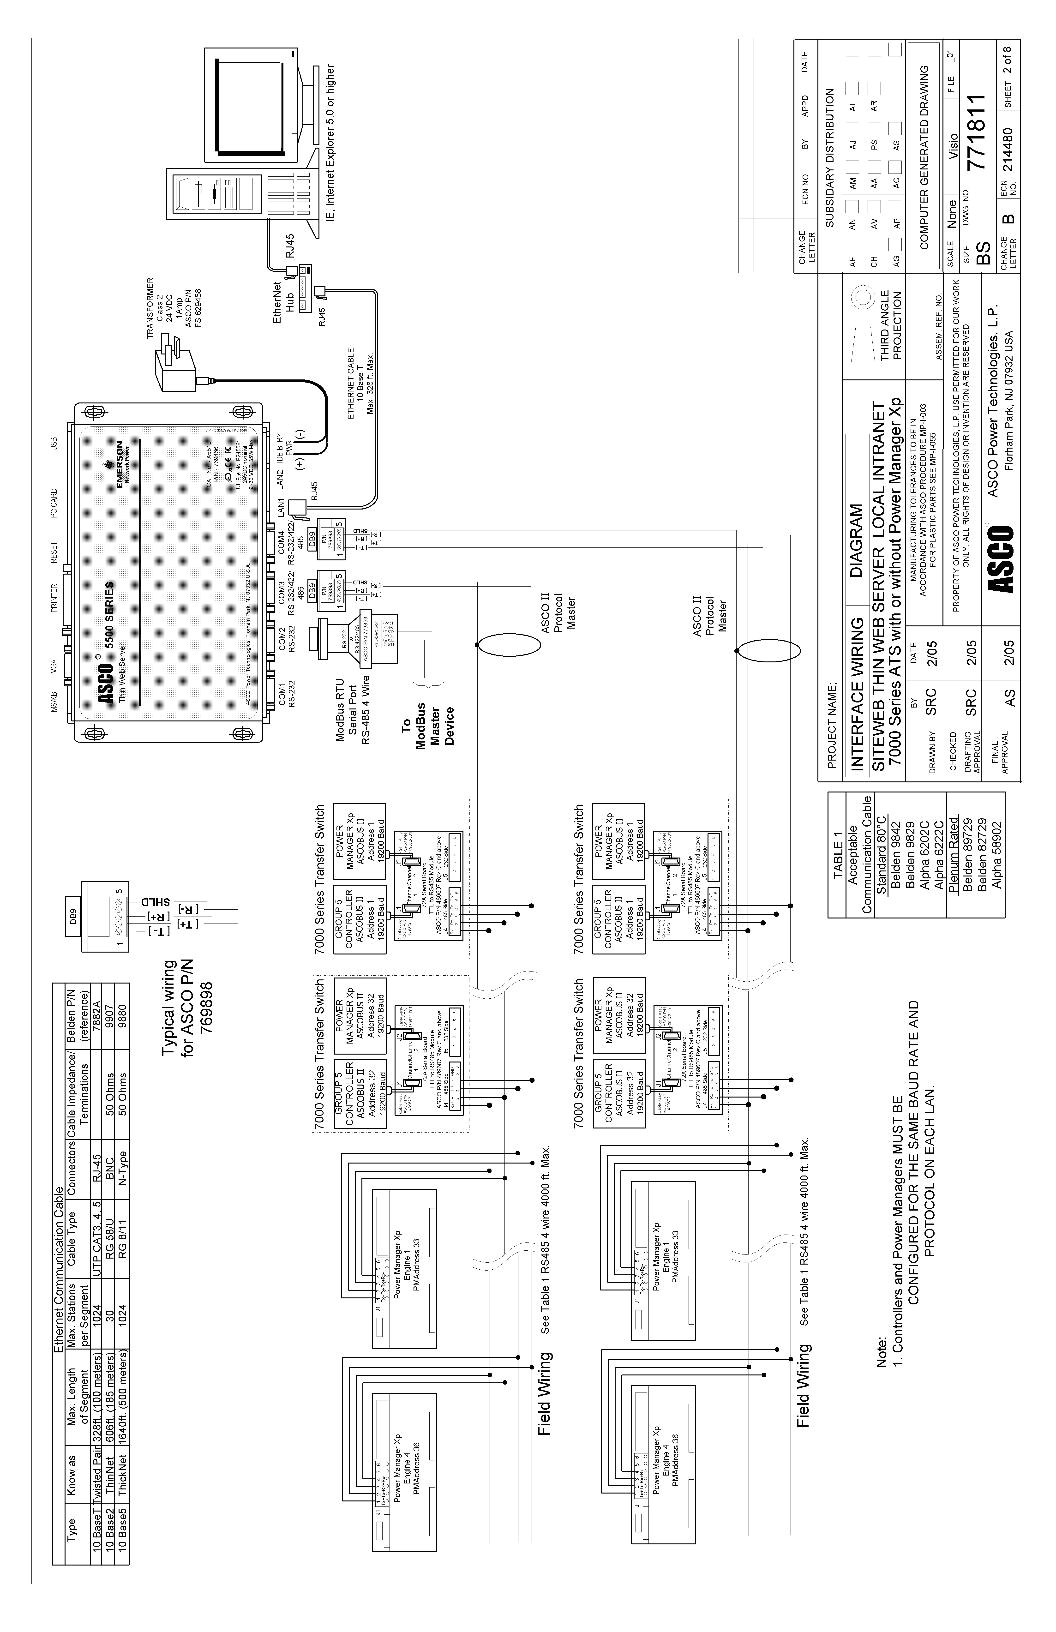 asco 7000 series ats wiring diagram collection wiring diagram sampleasco 7000 series ats wiring diagram